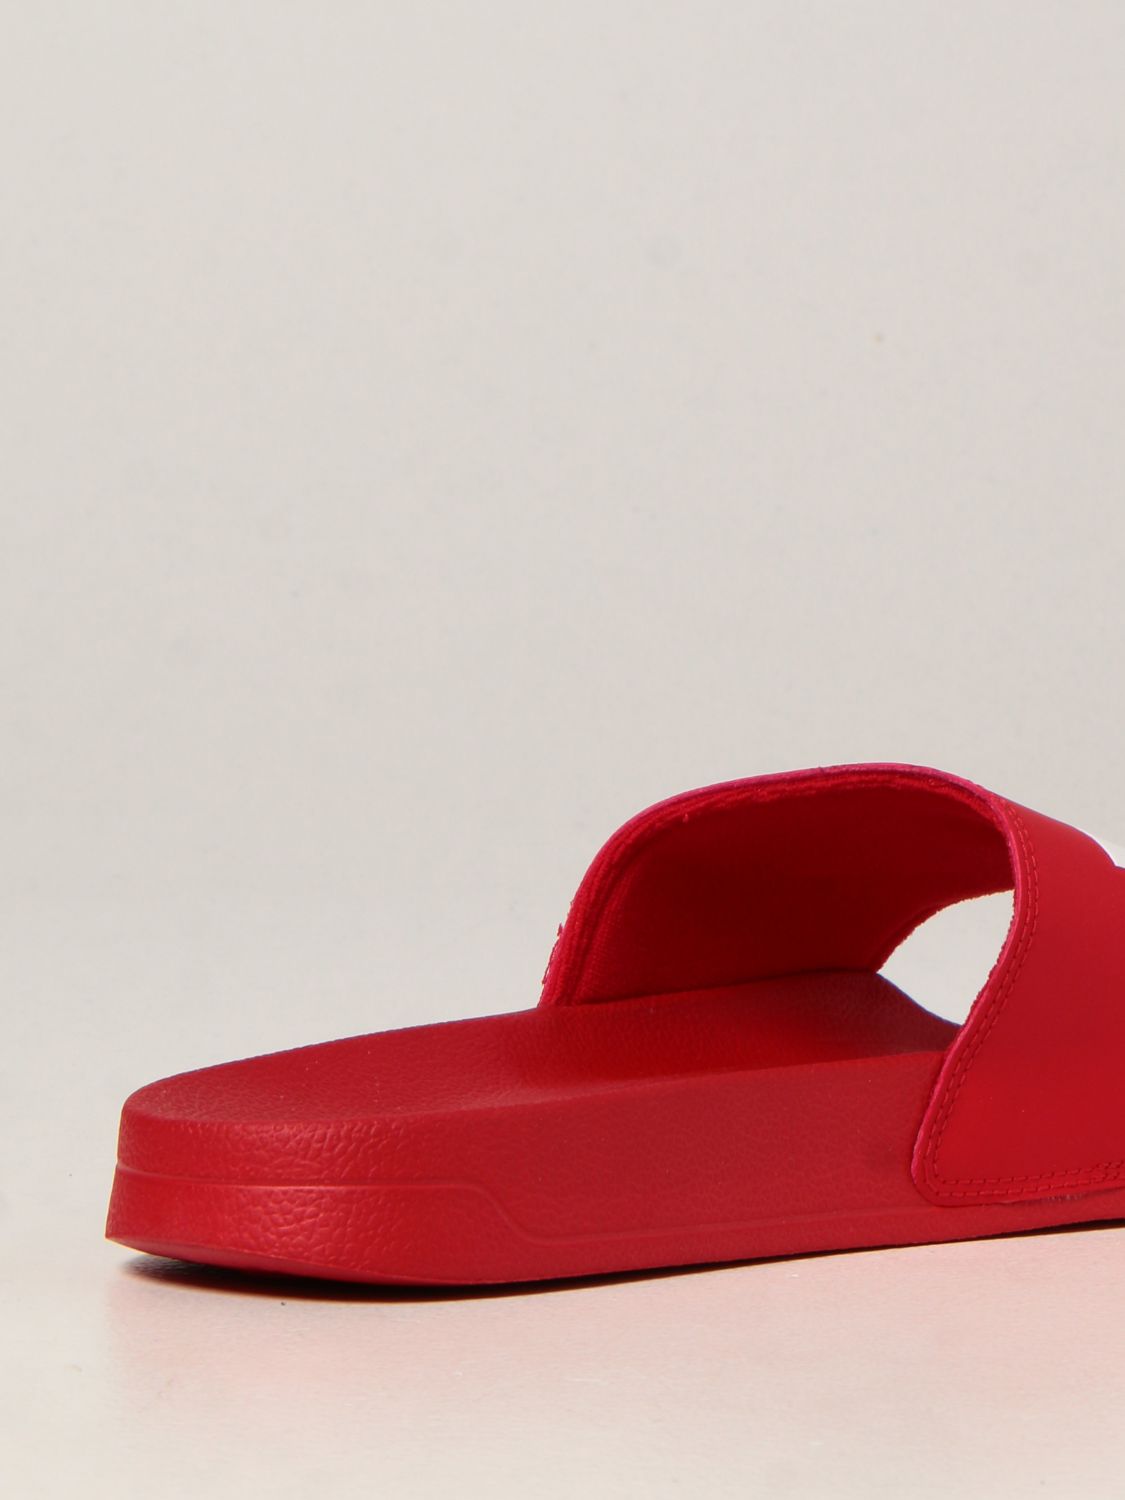 ADIDAS ORIGINALS: rubber slipper - Red | Adidas Originals sandals FU8296 online